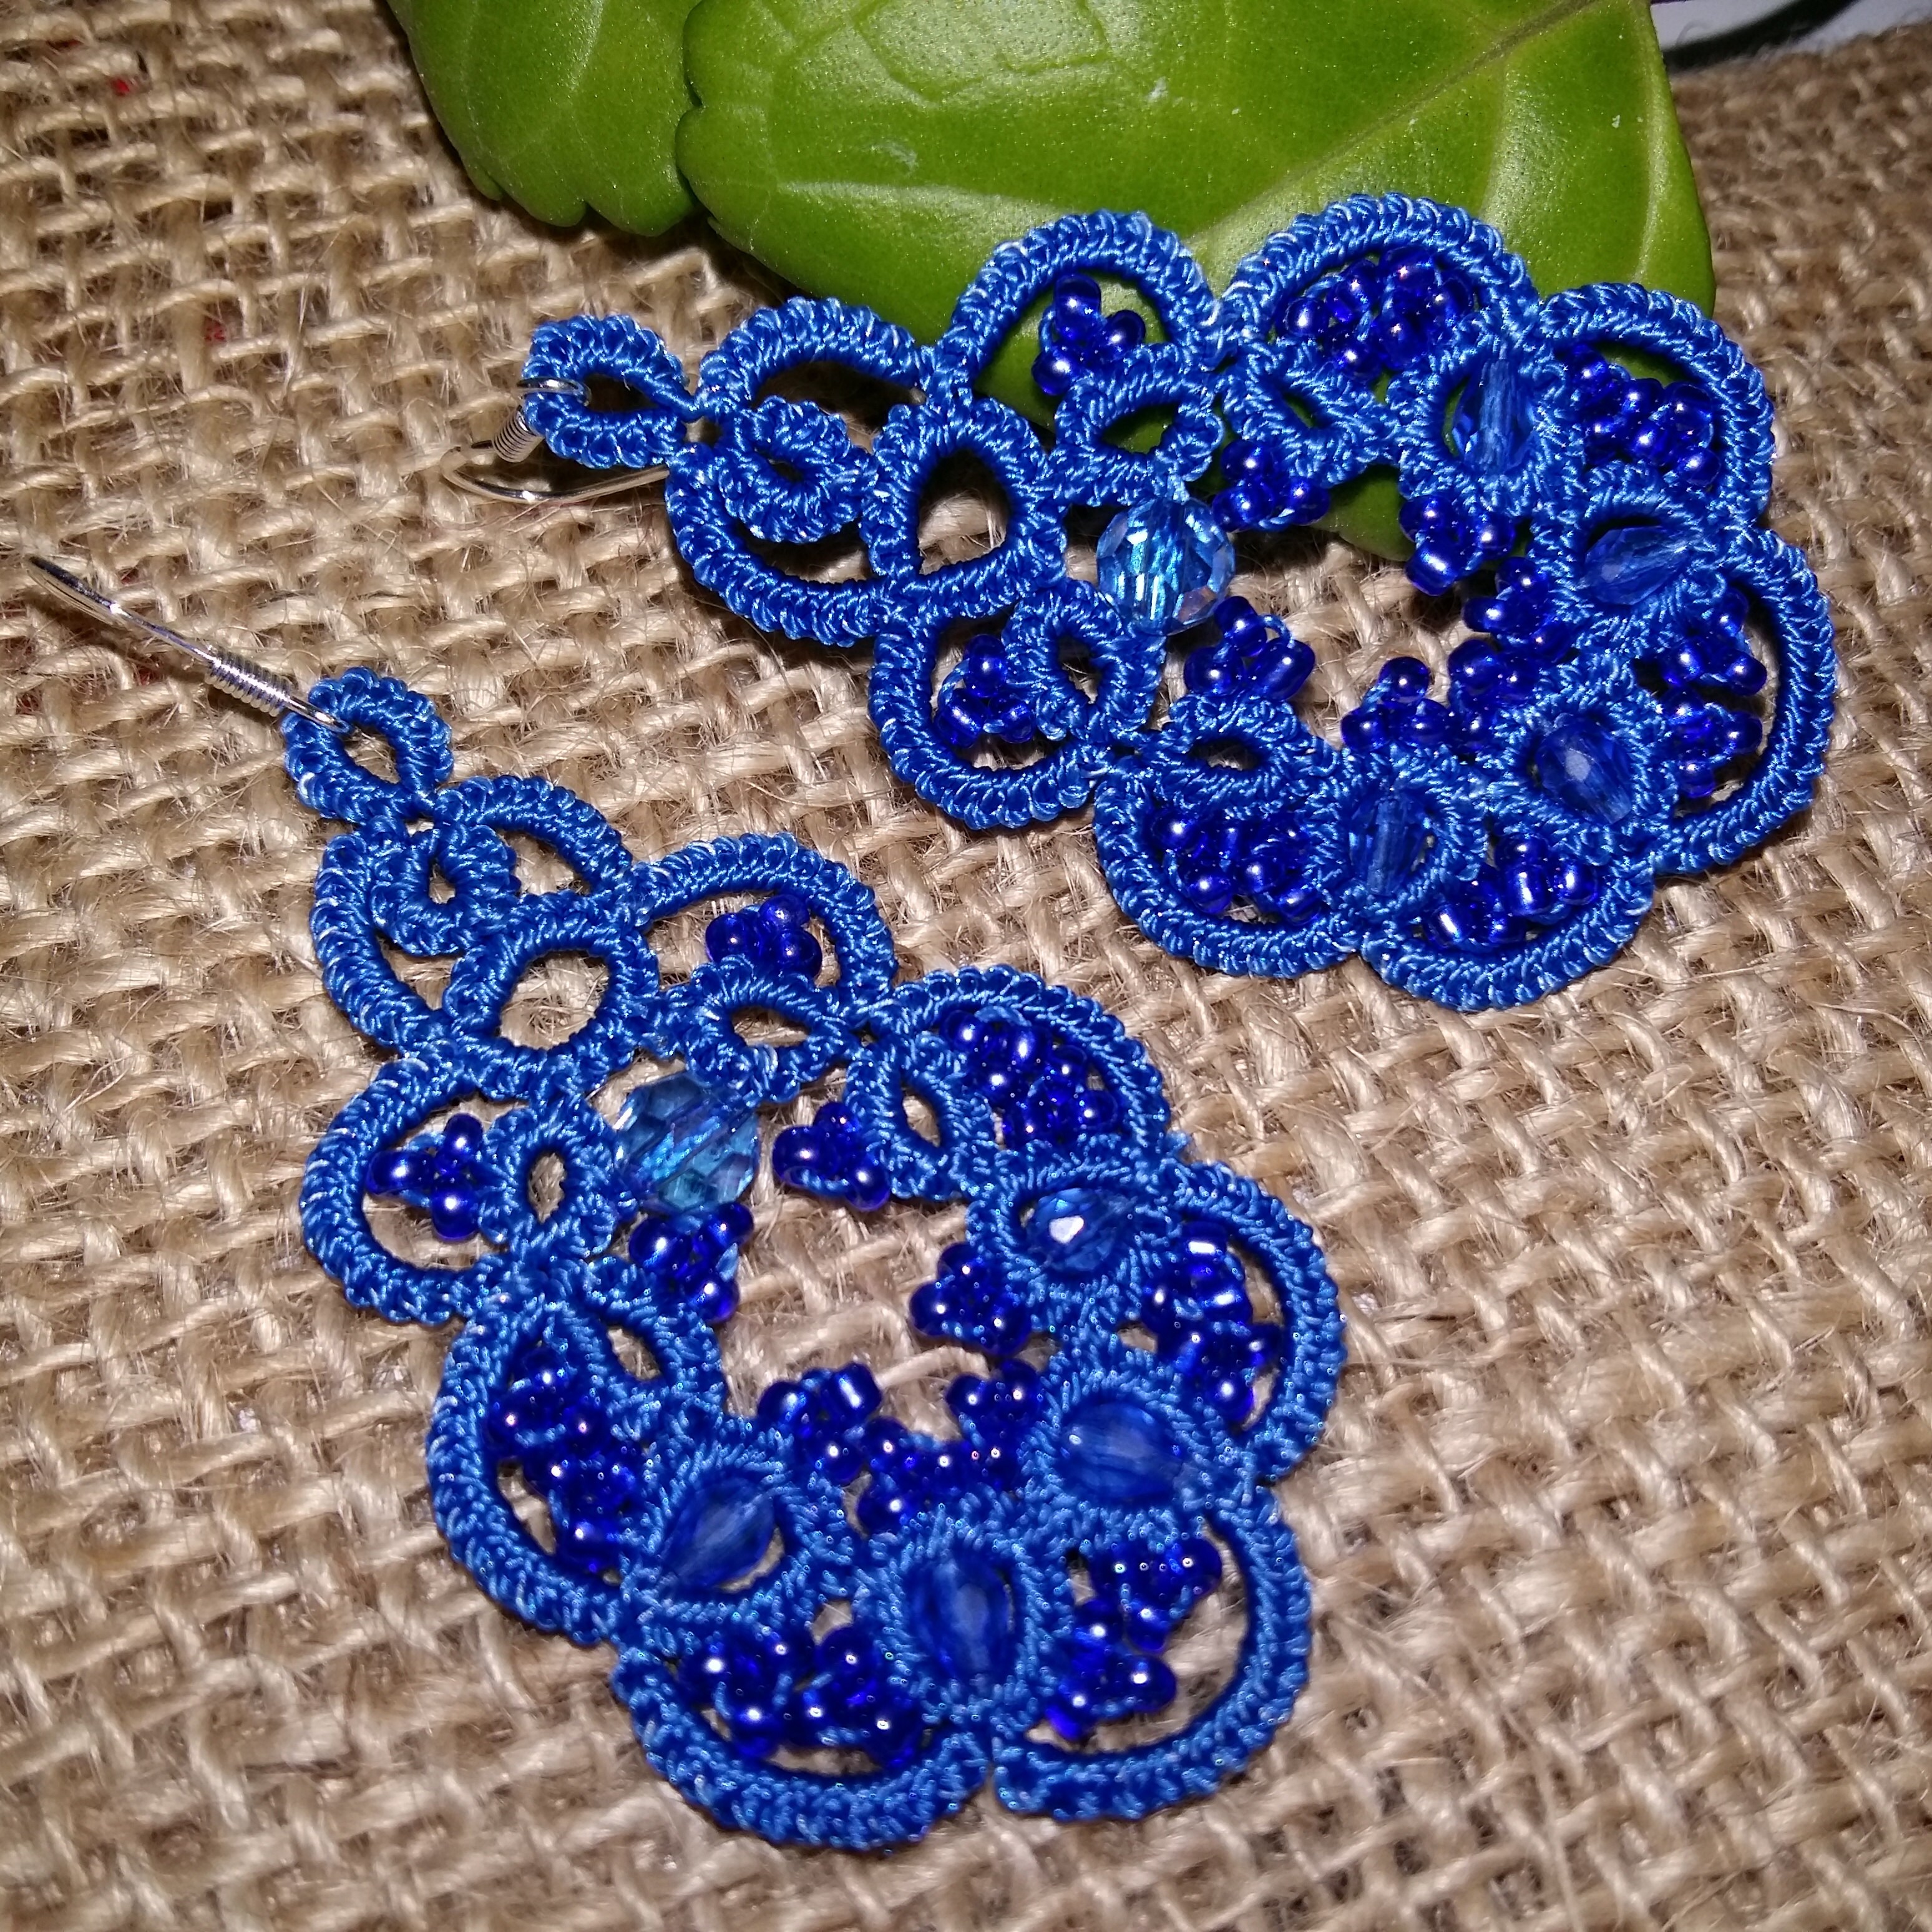 SvitLanu - Lace jewelry handmade. Will make for you a custom order